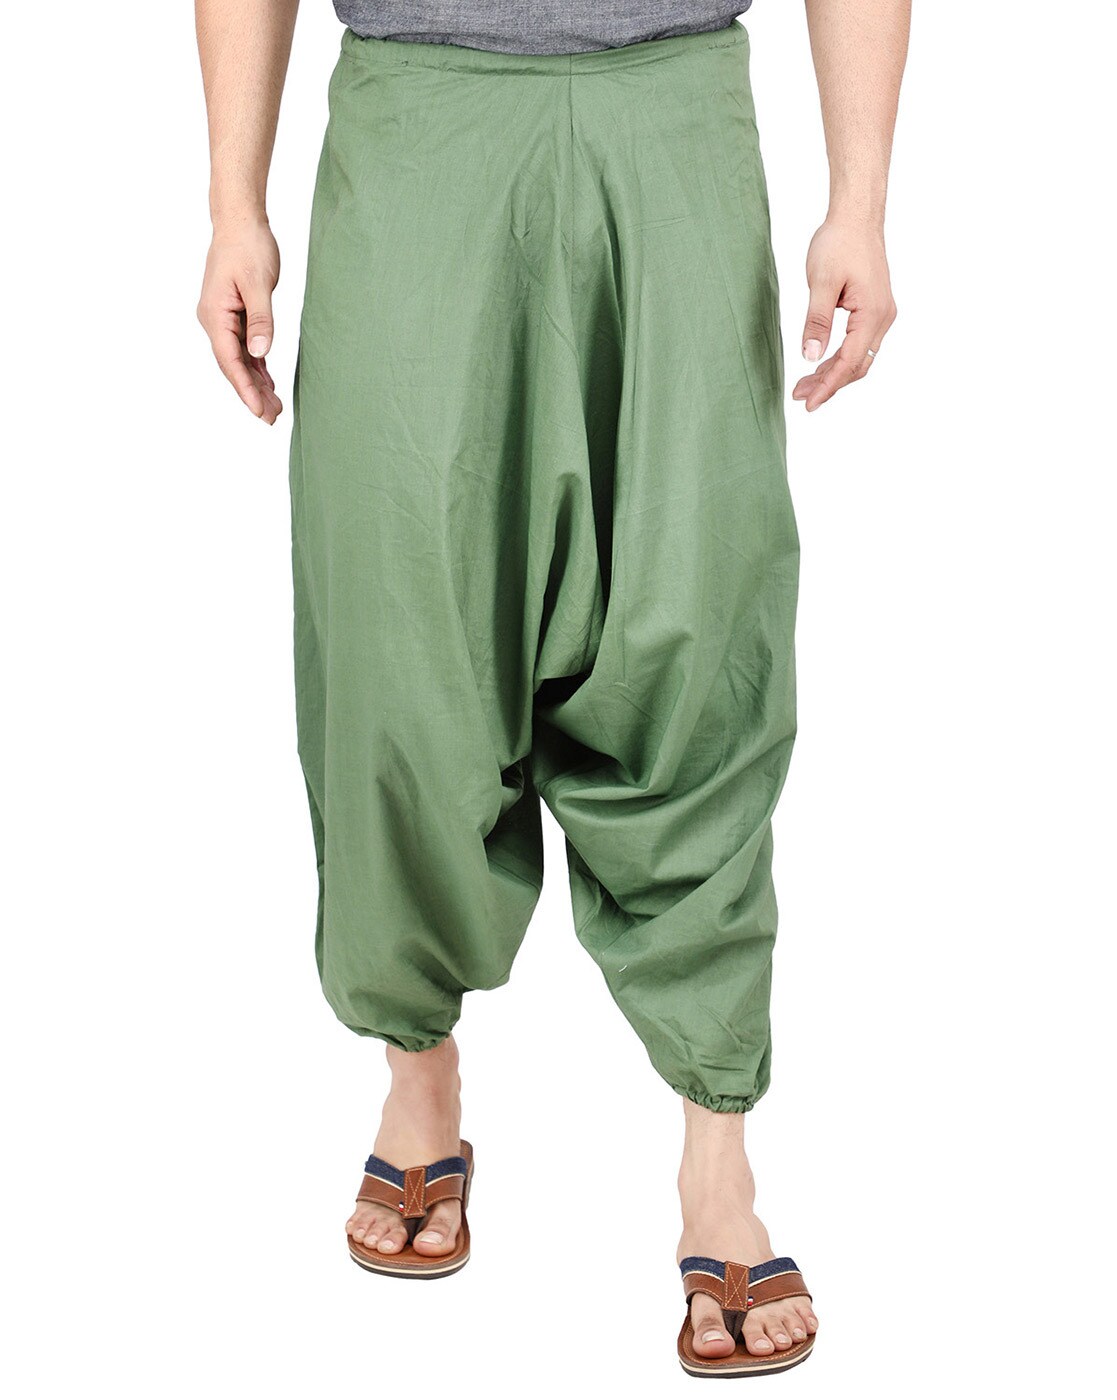 Whitewhale Mens Cotton Solid Harem Pants Yoga Trousers Hippie Pant